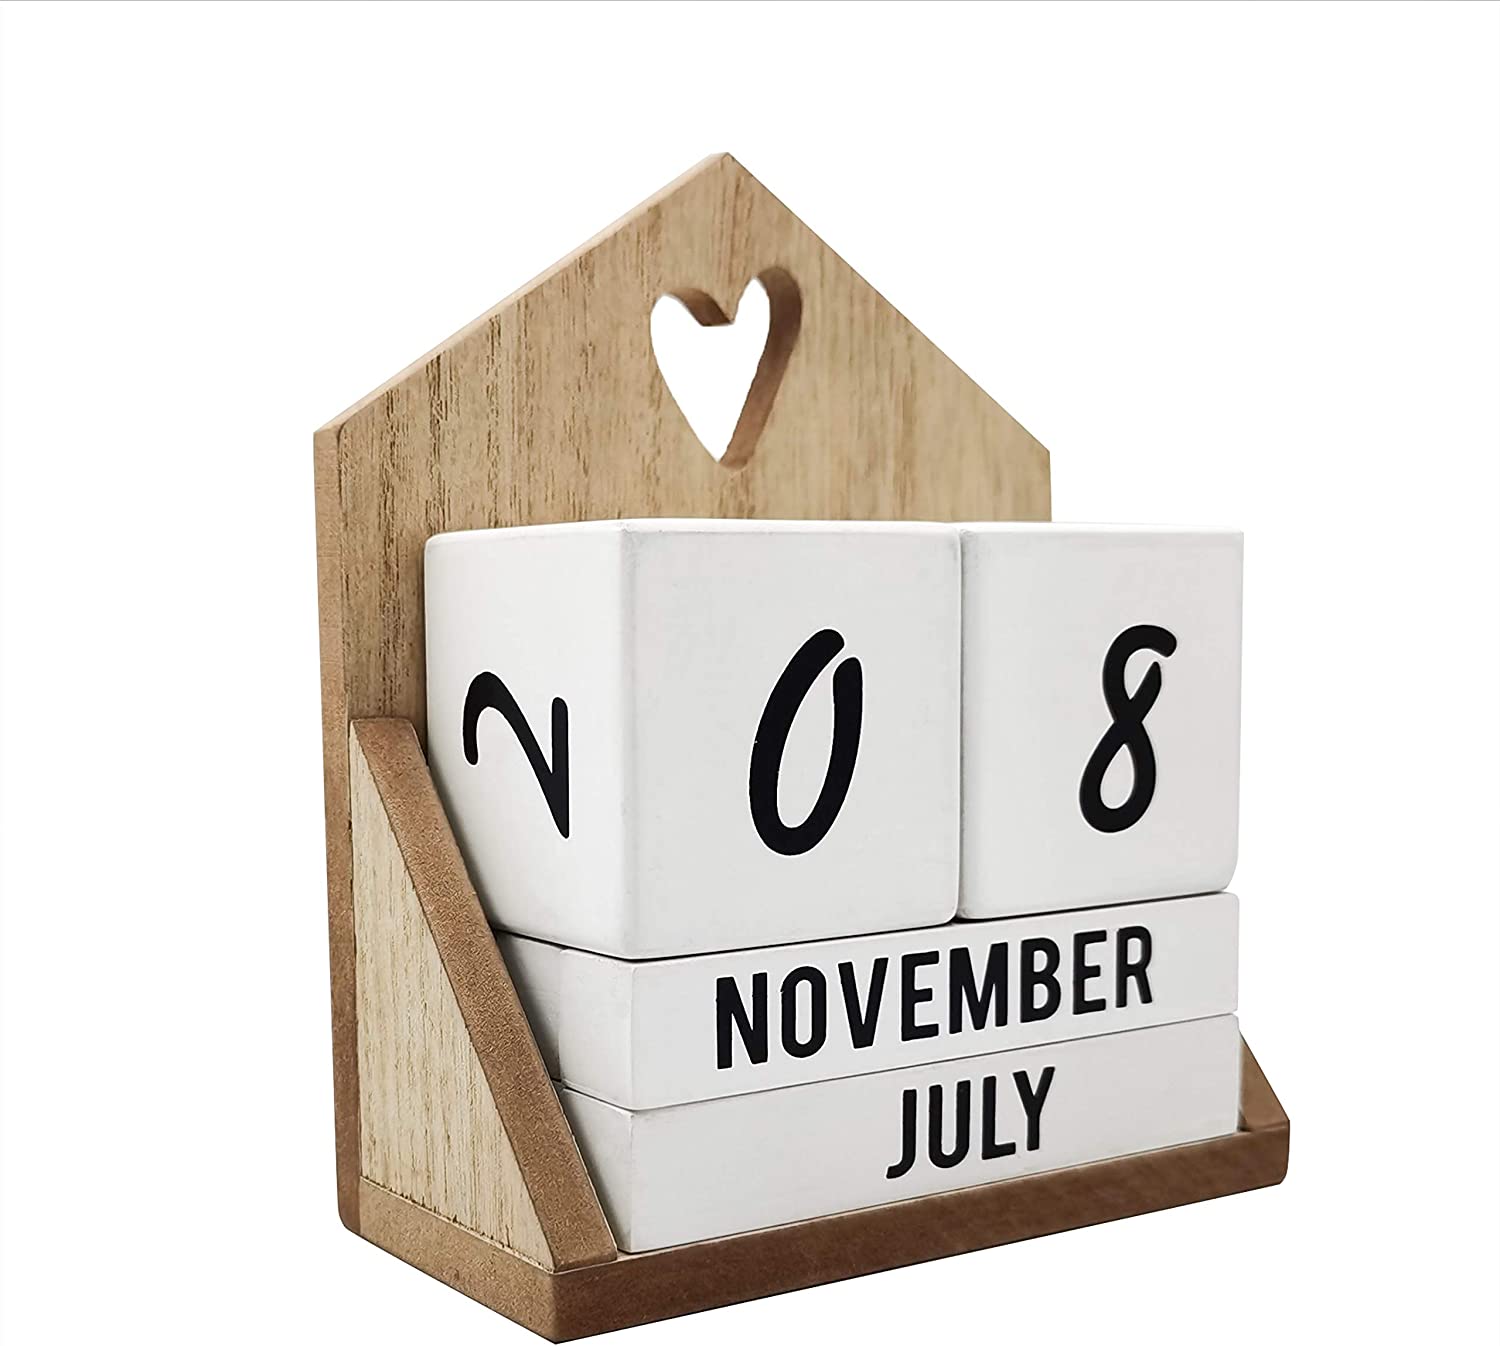 Wooden Table Top Calendar Block sign